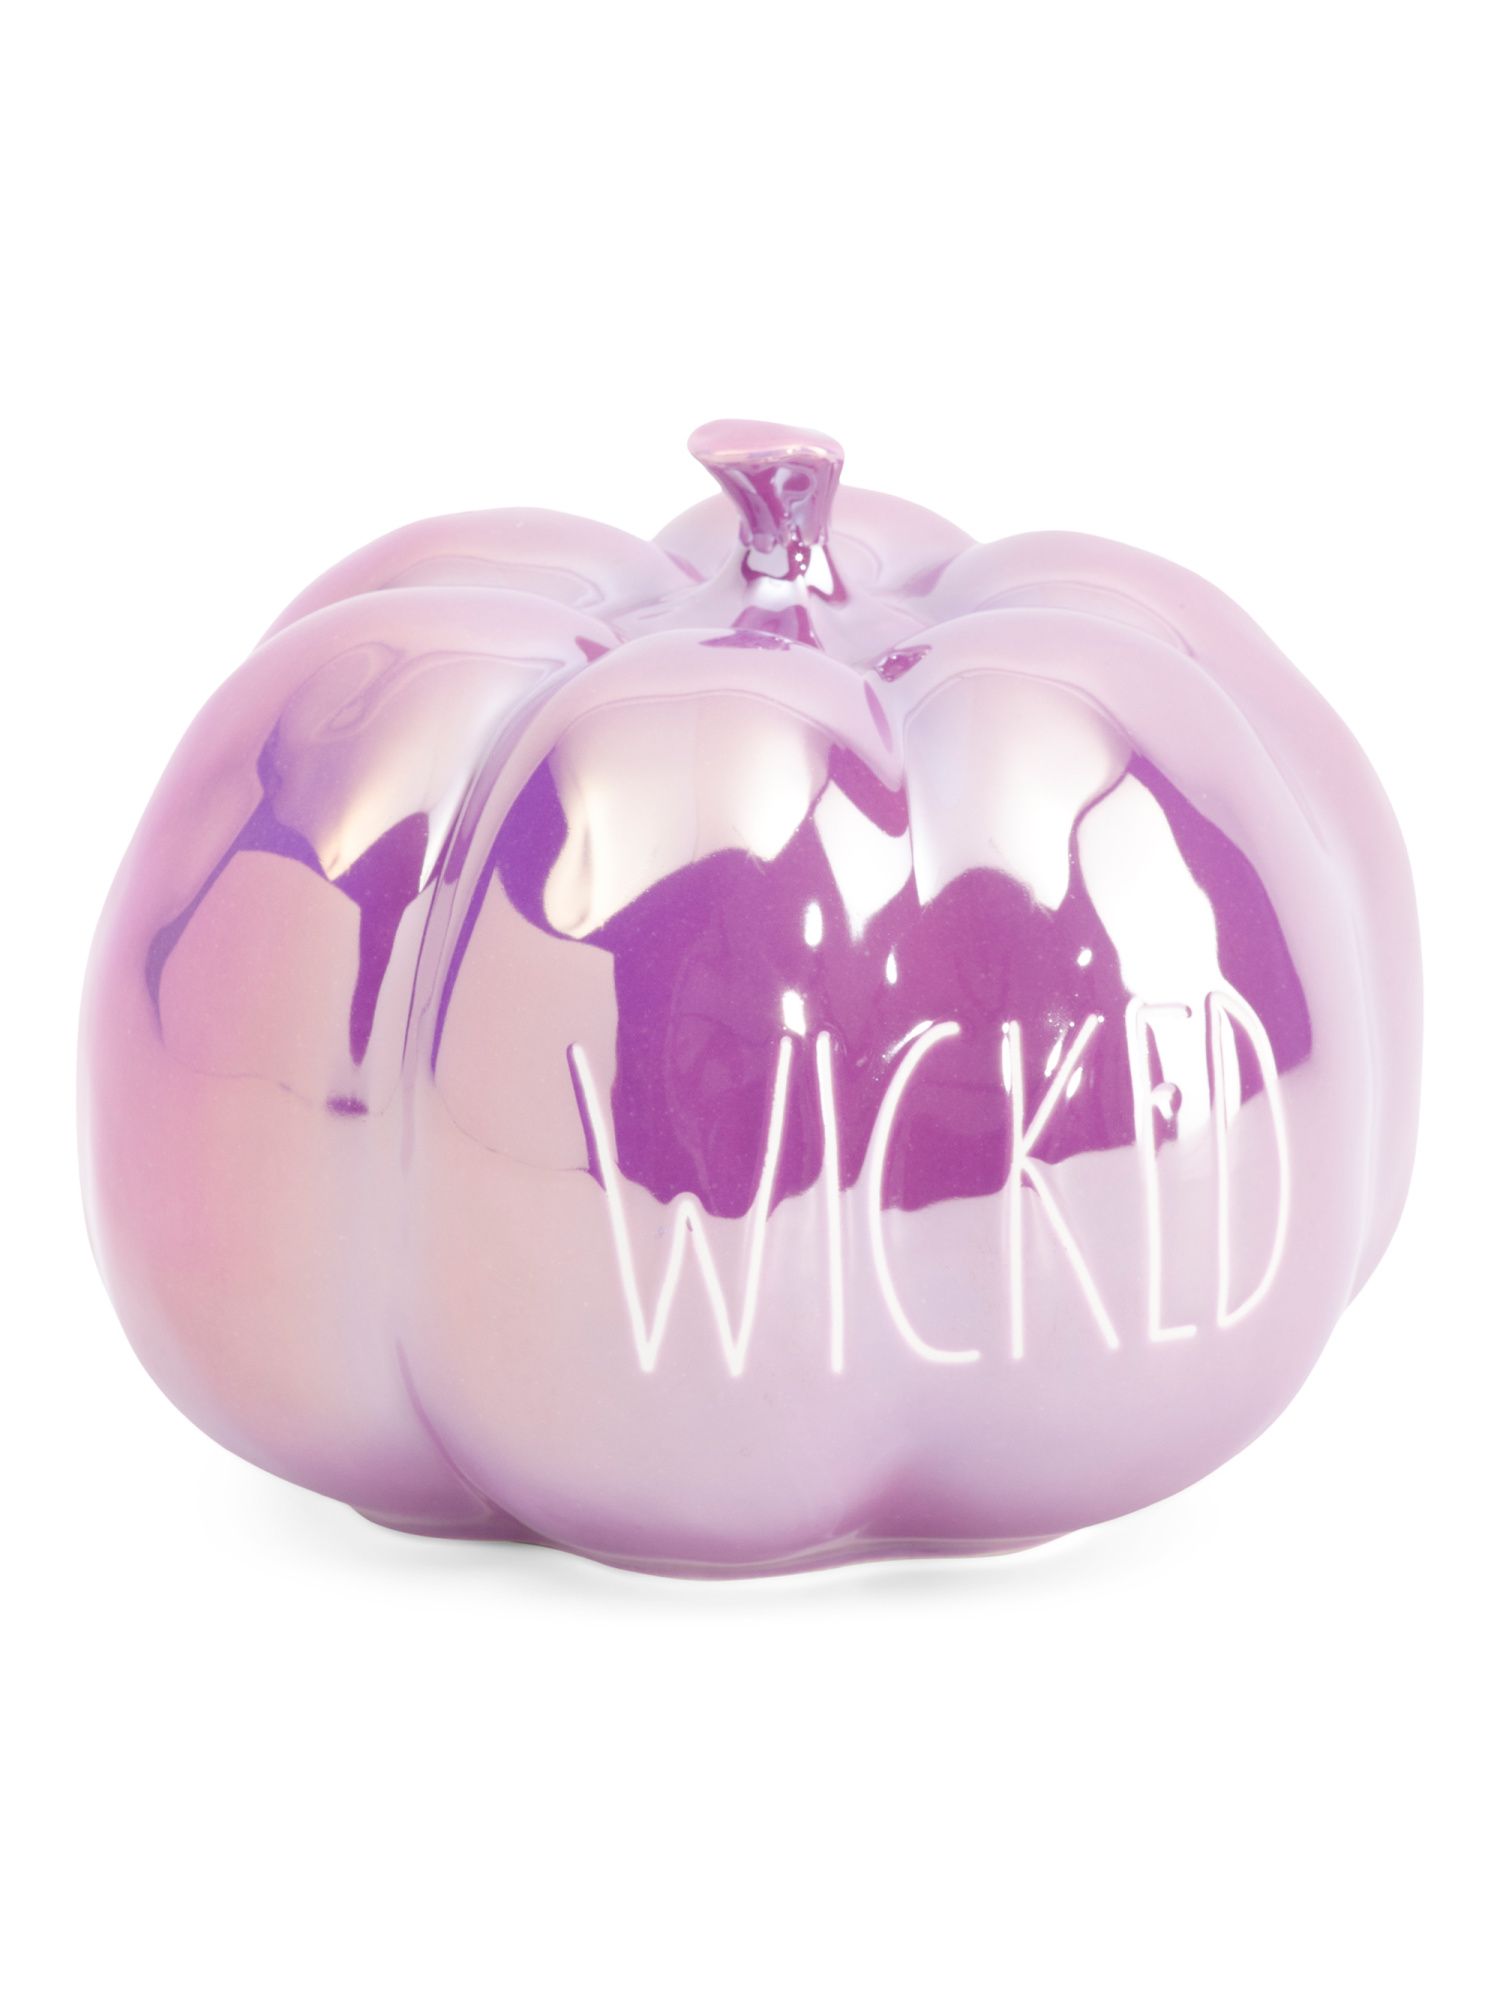 Luster Glaze Ceramic Wicked Pumpkin | TJ Maxx